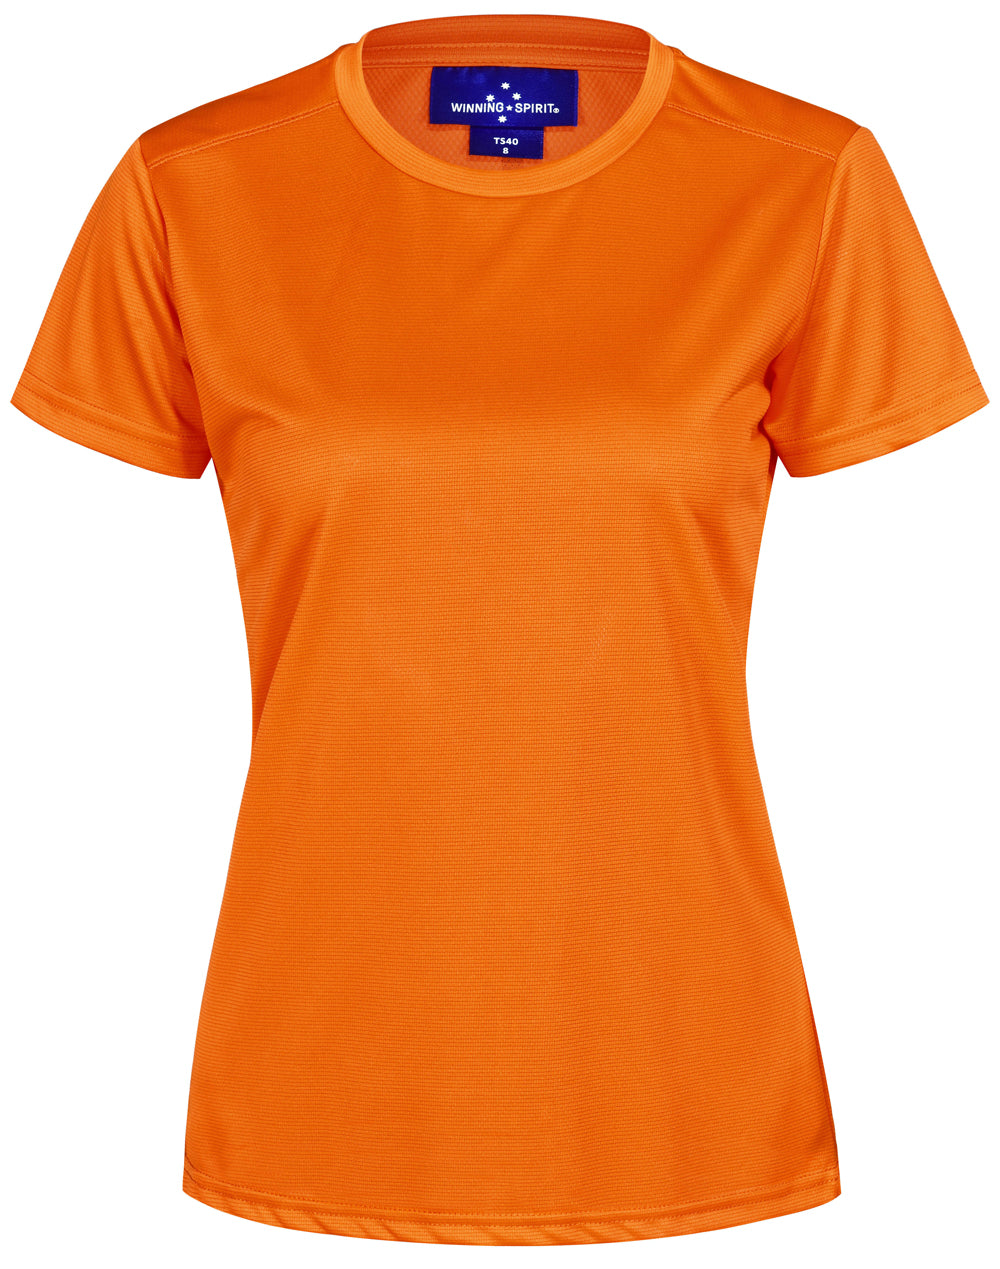 Ladies Rapid Cool TM  Ultra Light Tee Shirt TS40 Casual Wear Winning Spirit Orange 6 